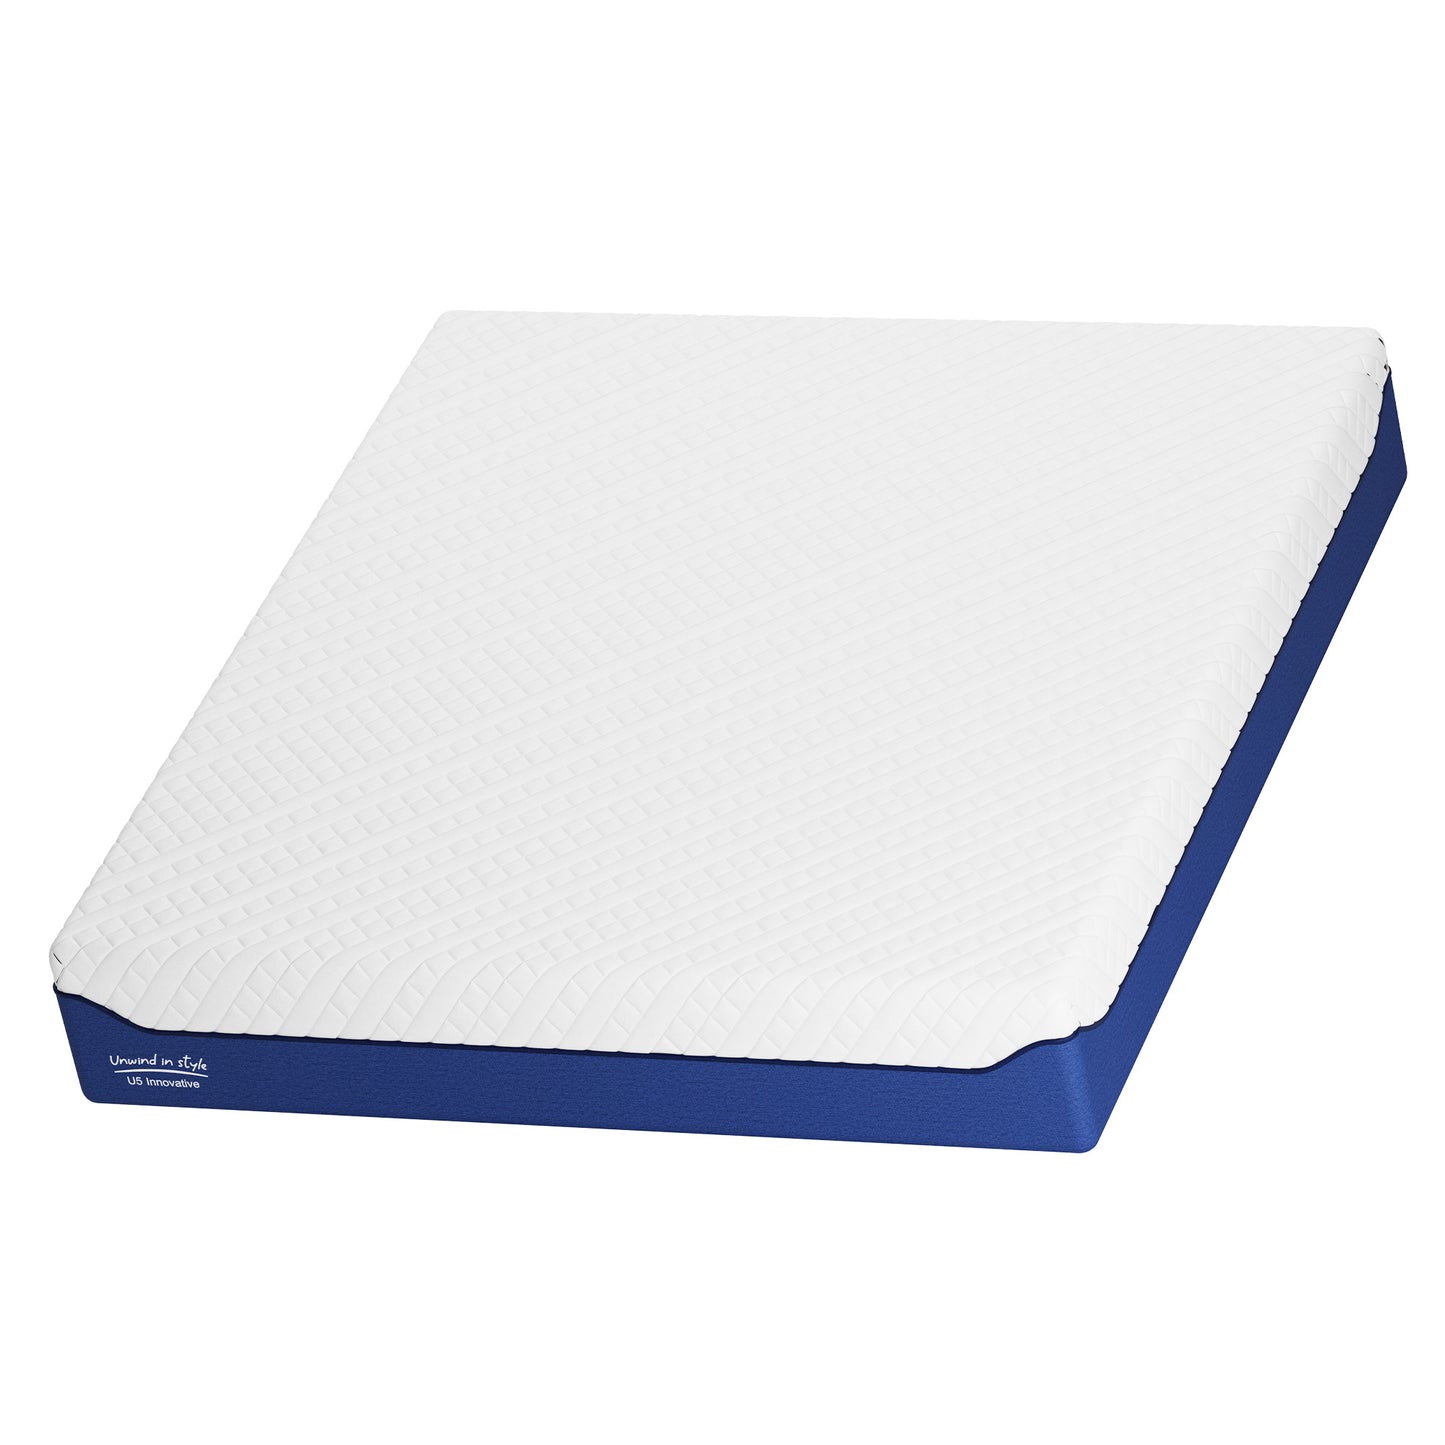 SogesPower 14inches Thickness Hybrid Mattress Gel Memory Foam- King, White+Blue